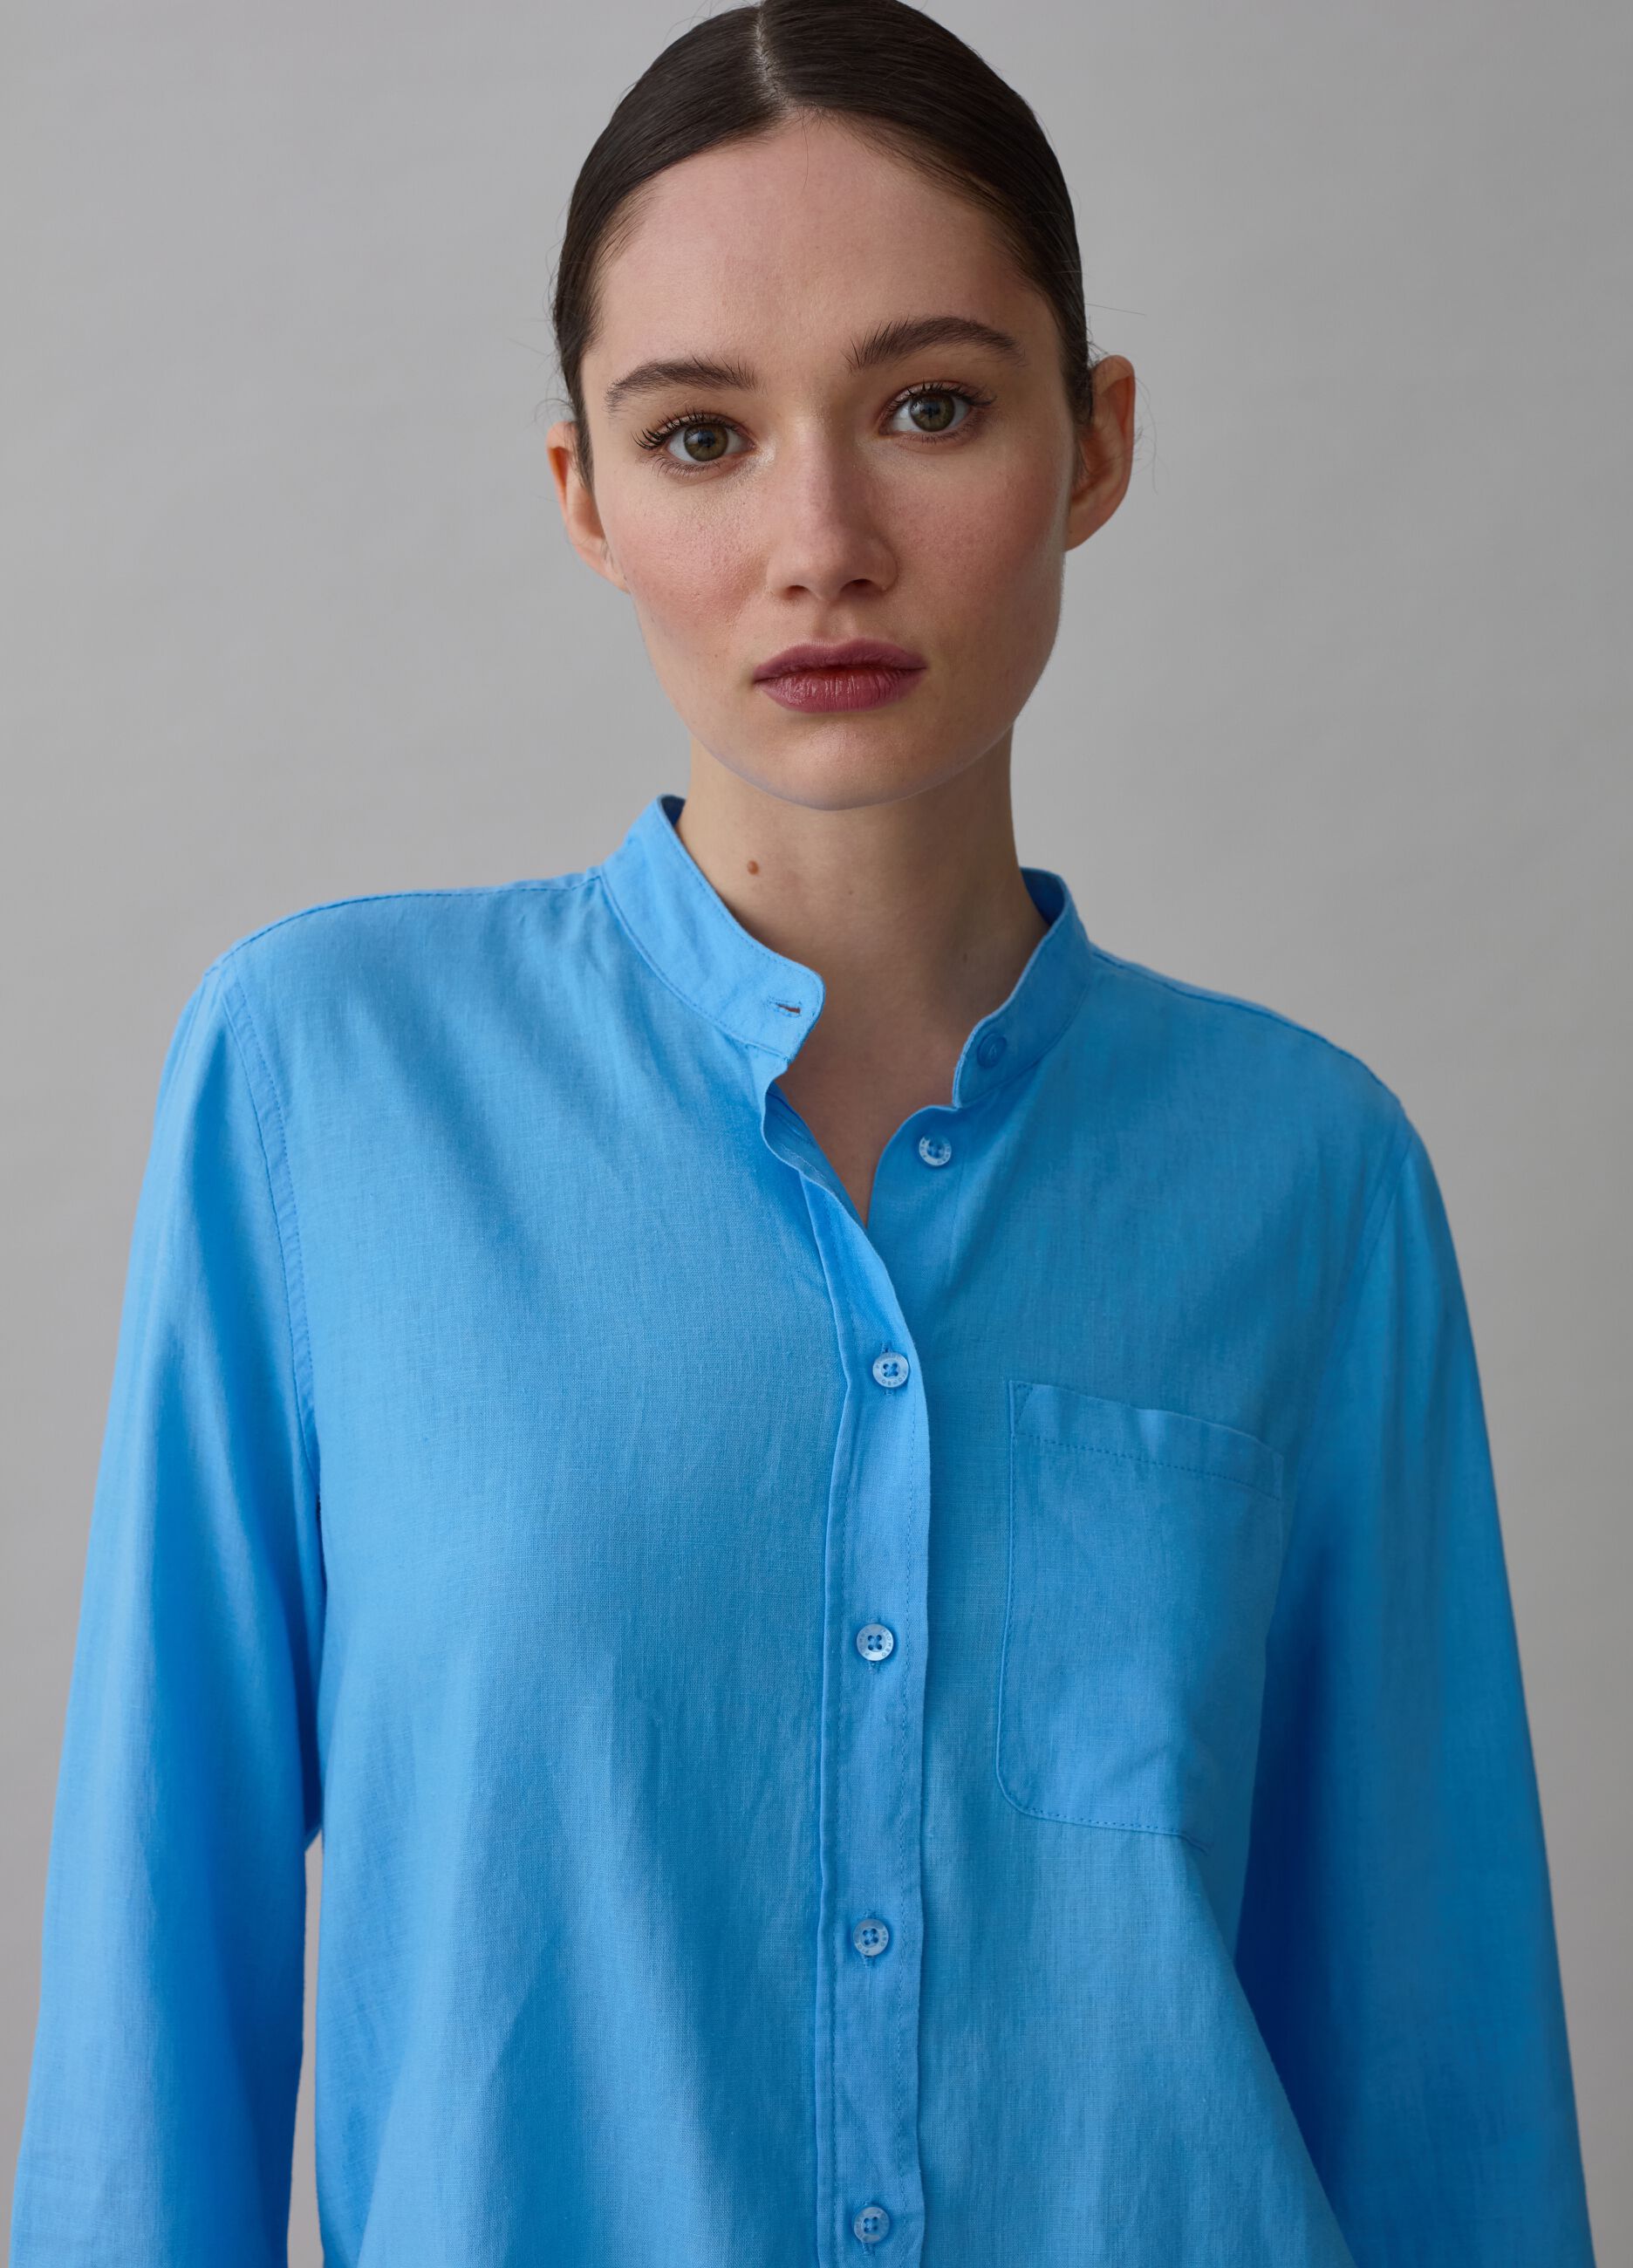 Shirt with Mandarin collar and pocket